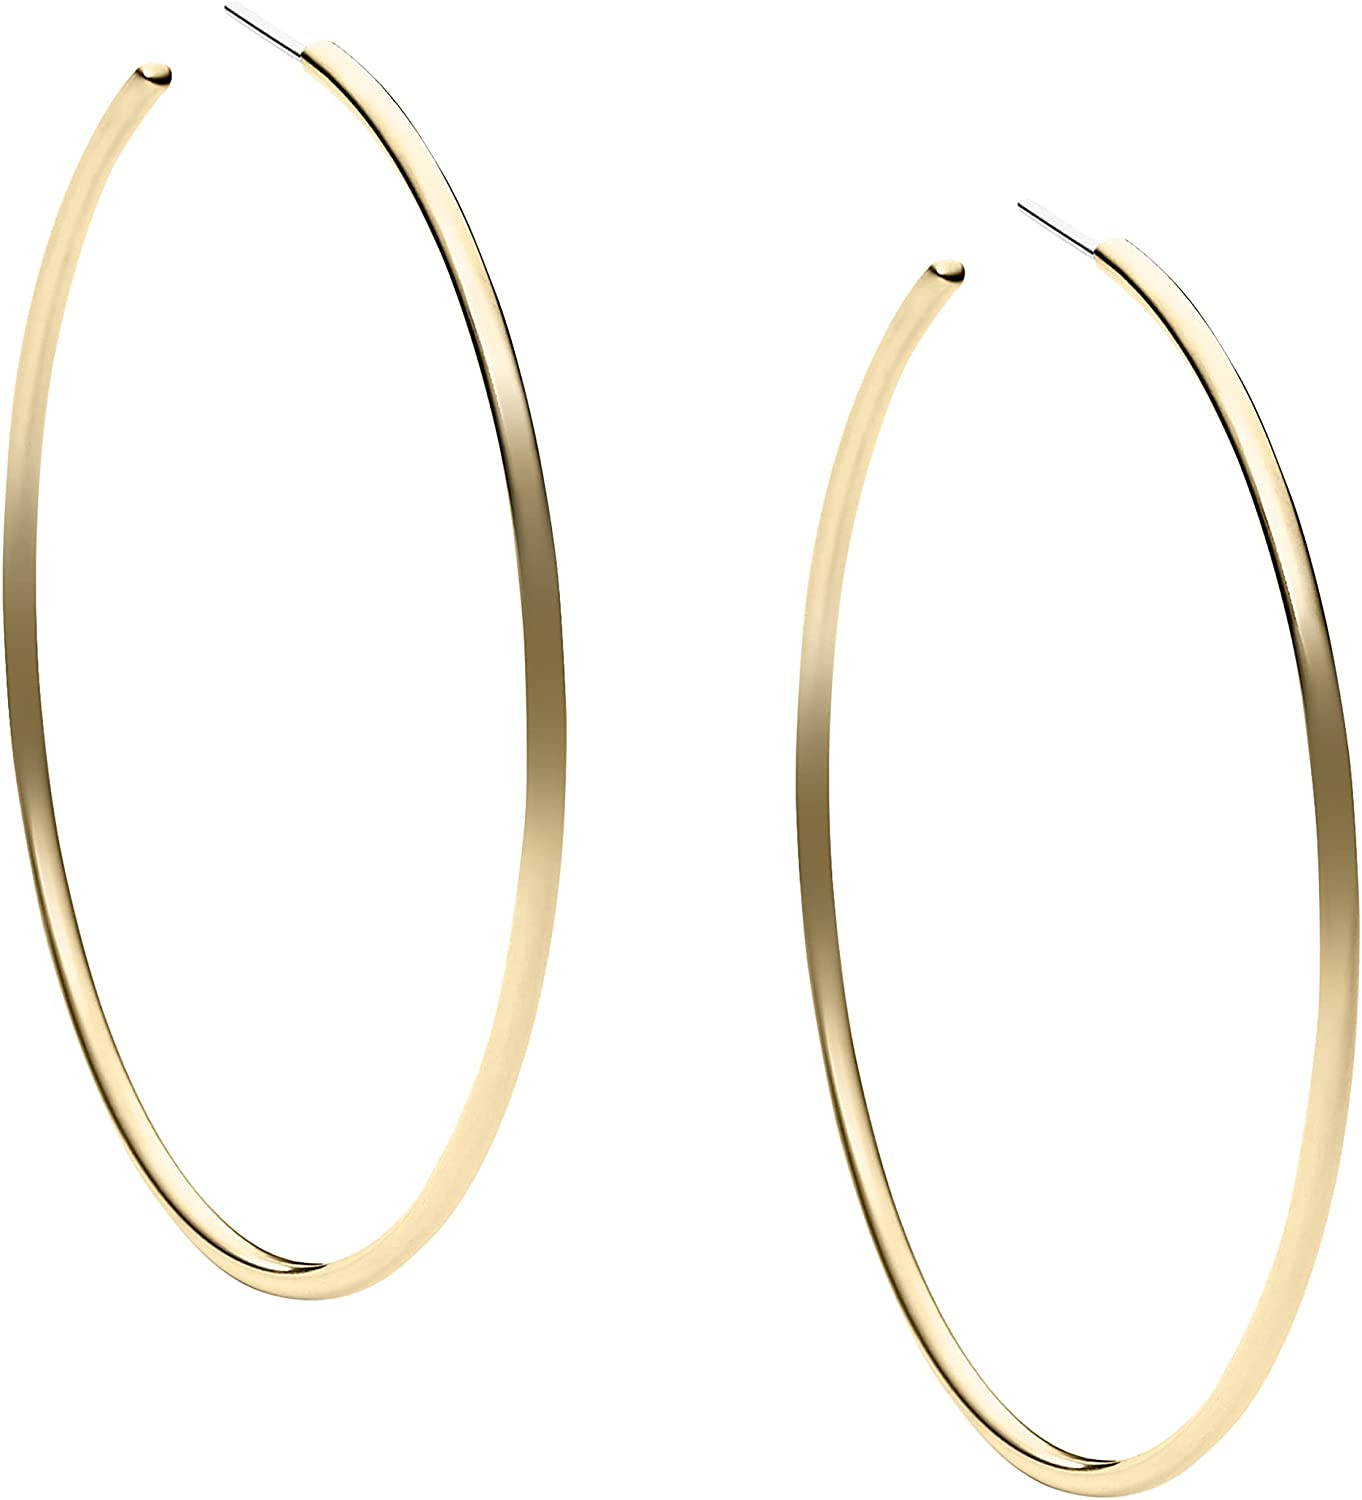 Michael Kors Women's Stainless Steel Gold-Tone Hoop Earrings